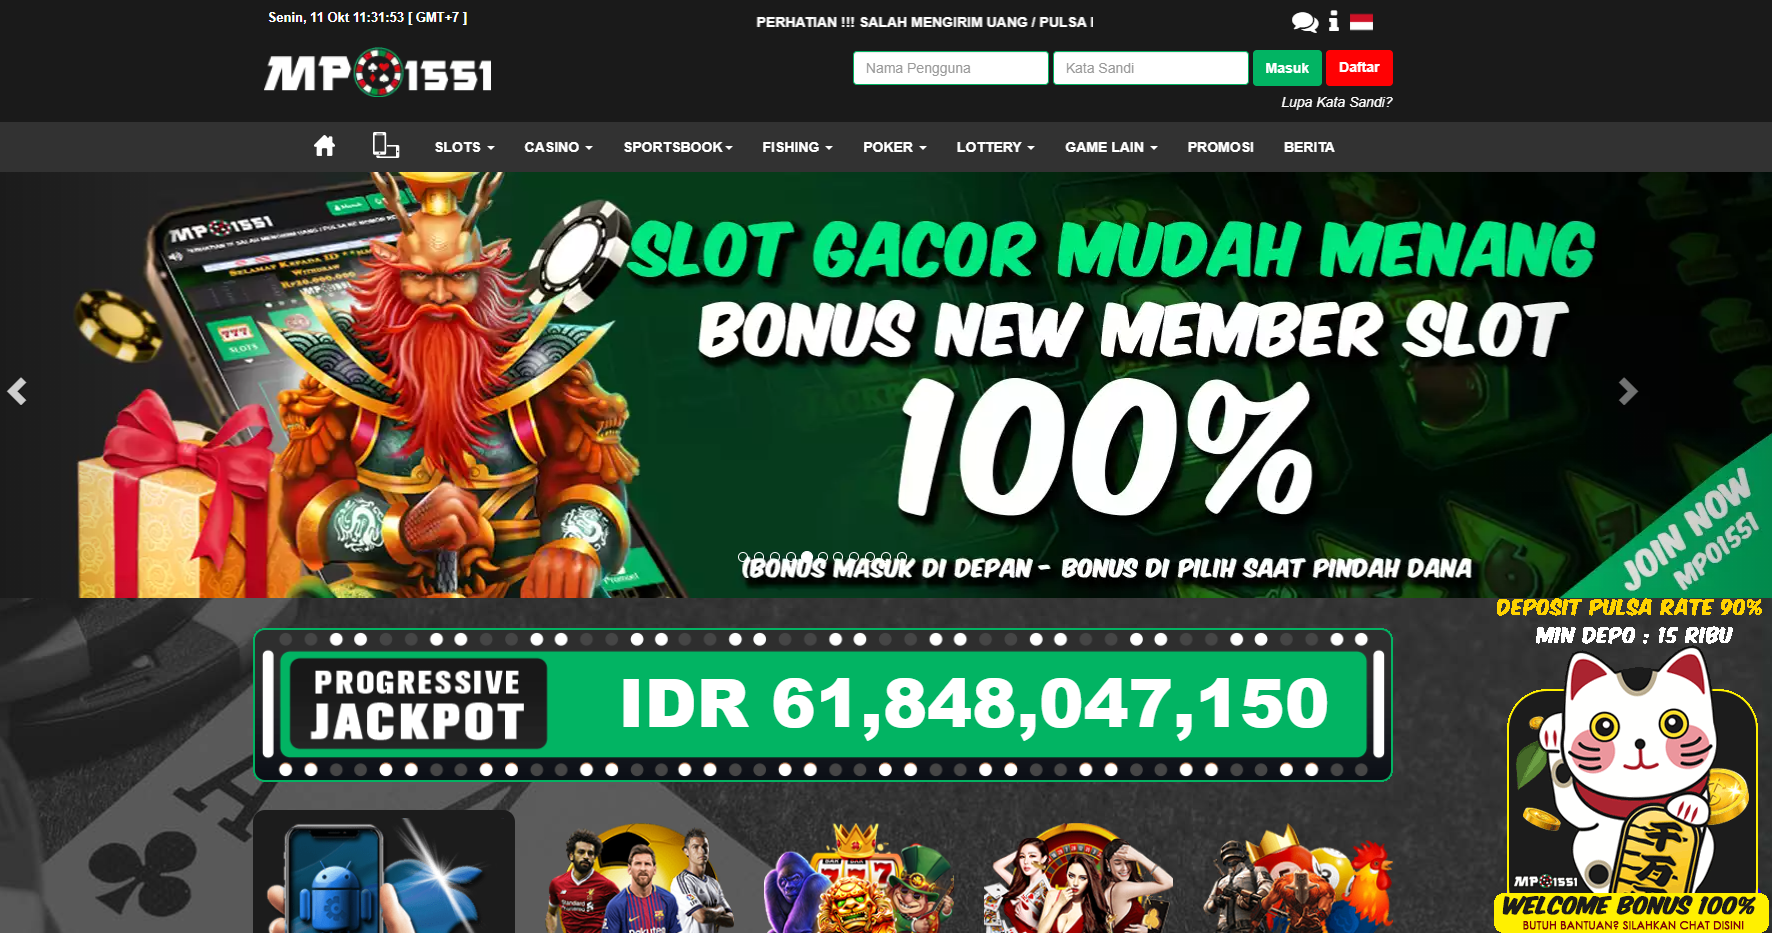 MPO1551 Situs Judi Slot Online Tembak Ikan Online Deposit Dana